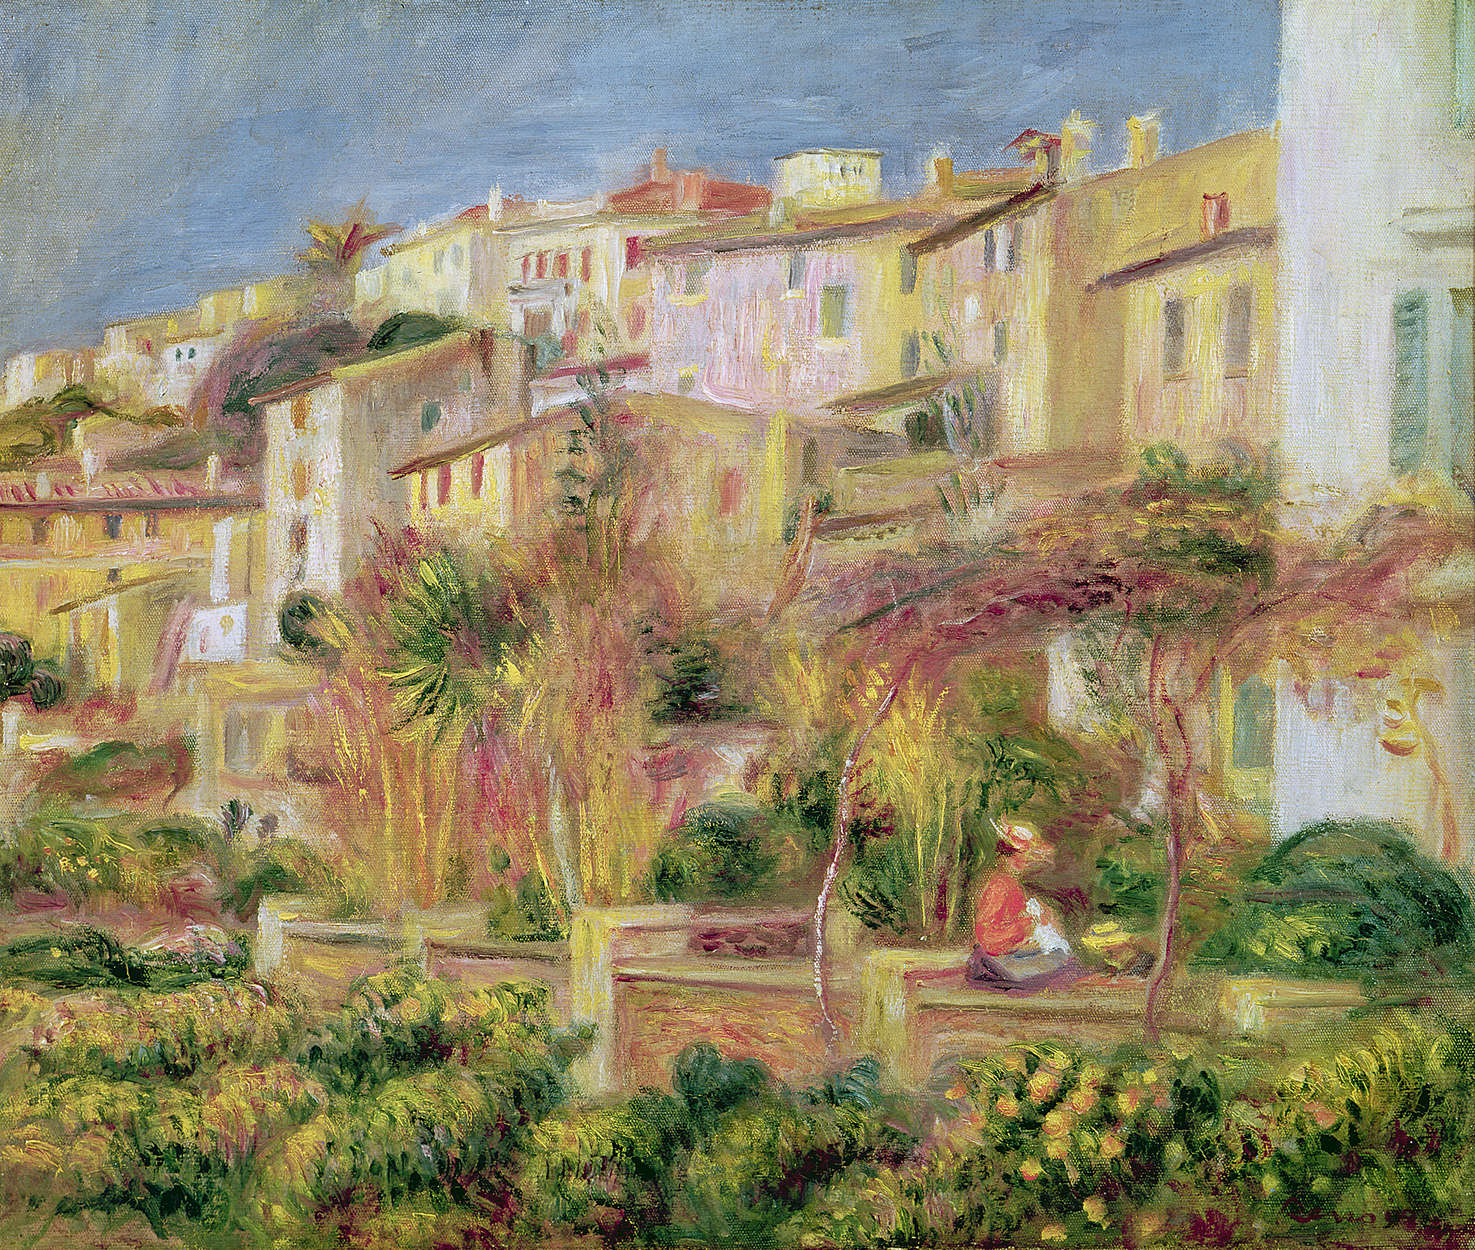             Fototapete "Terrasse in Cagnes" von Pierre Auguste Renoir
        